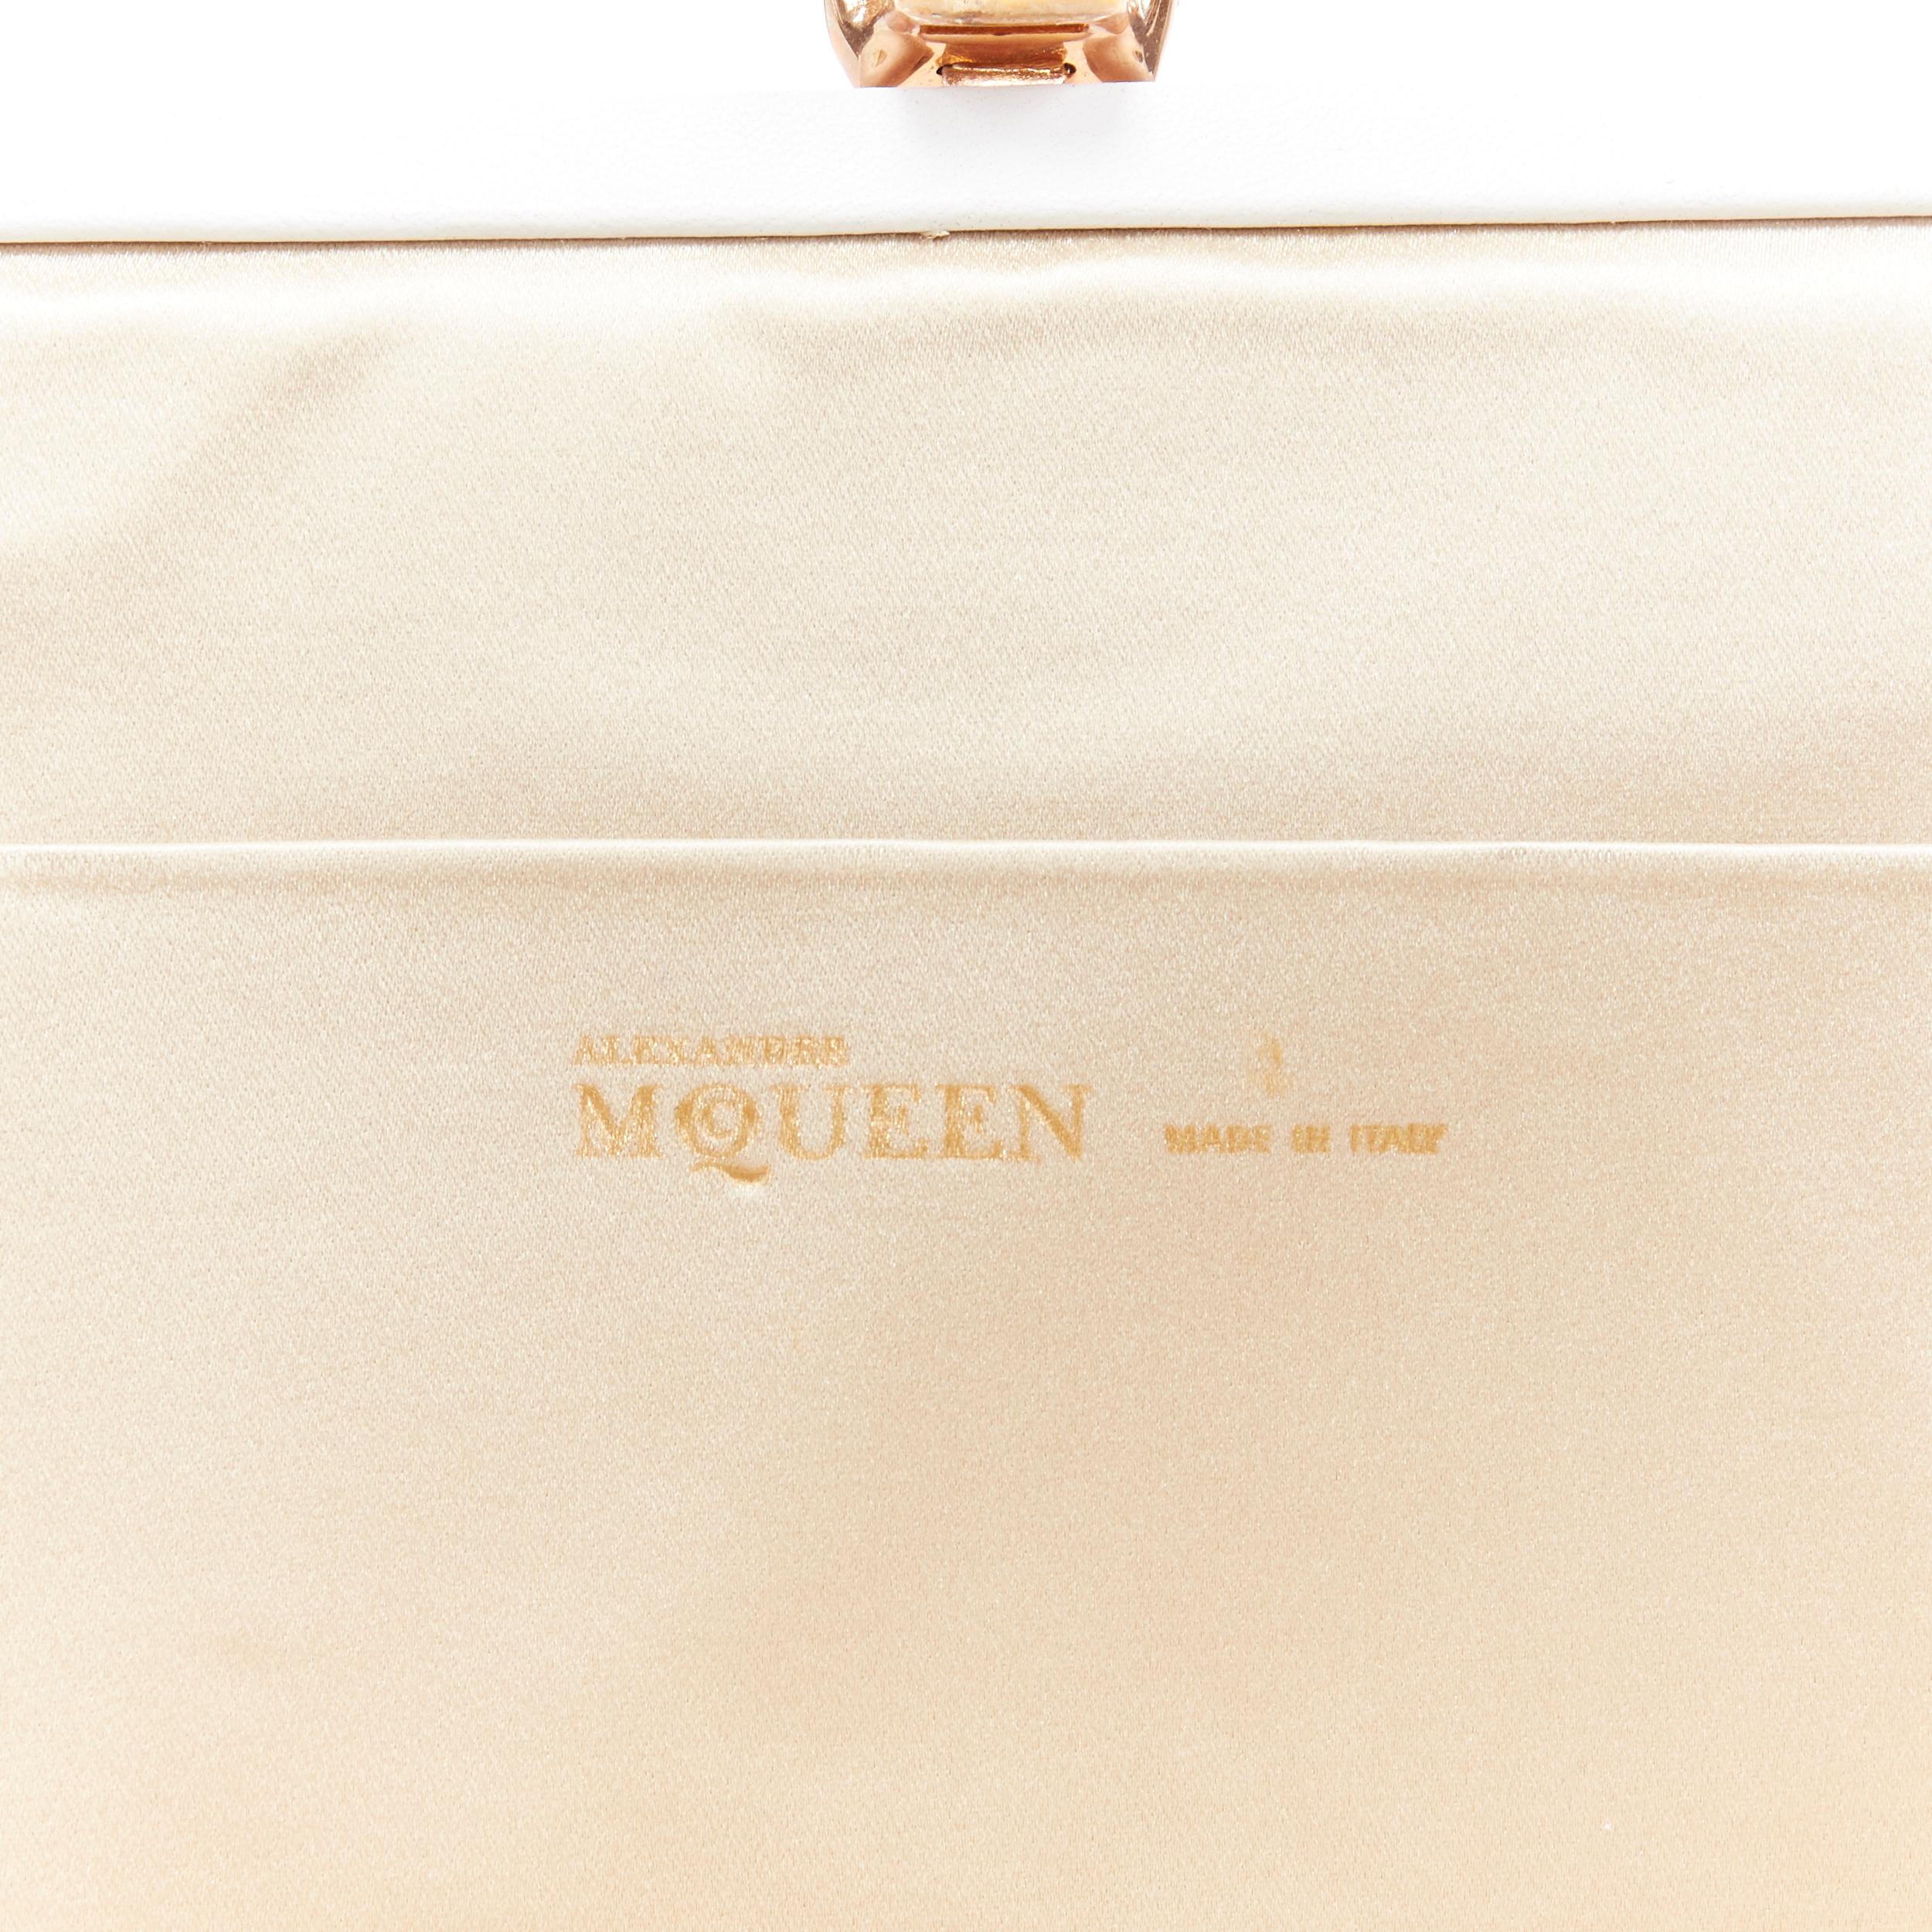 ALEXANDER MCQUEEN orange printed scaled leather gold crystal skull clutch  bag